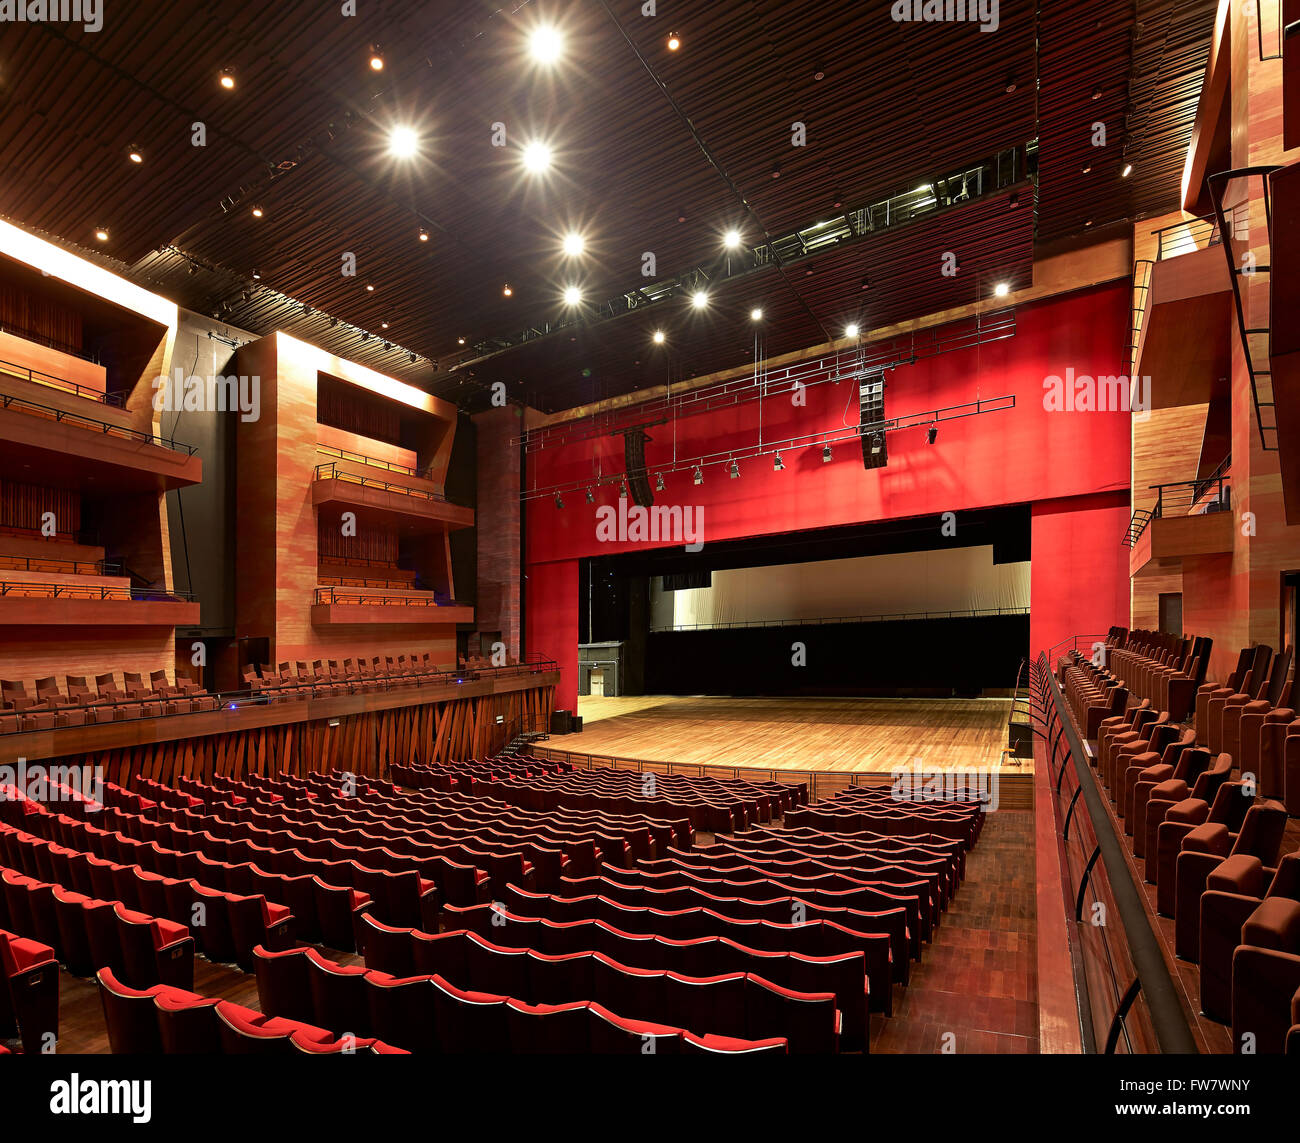 Concert hall with tiers and stage. La Cidade das Artes, Barra da Tijuca, Brazil. Architect: Christian de Portzamparc, 2014. Stock Photo